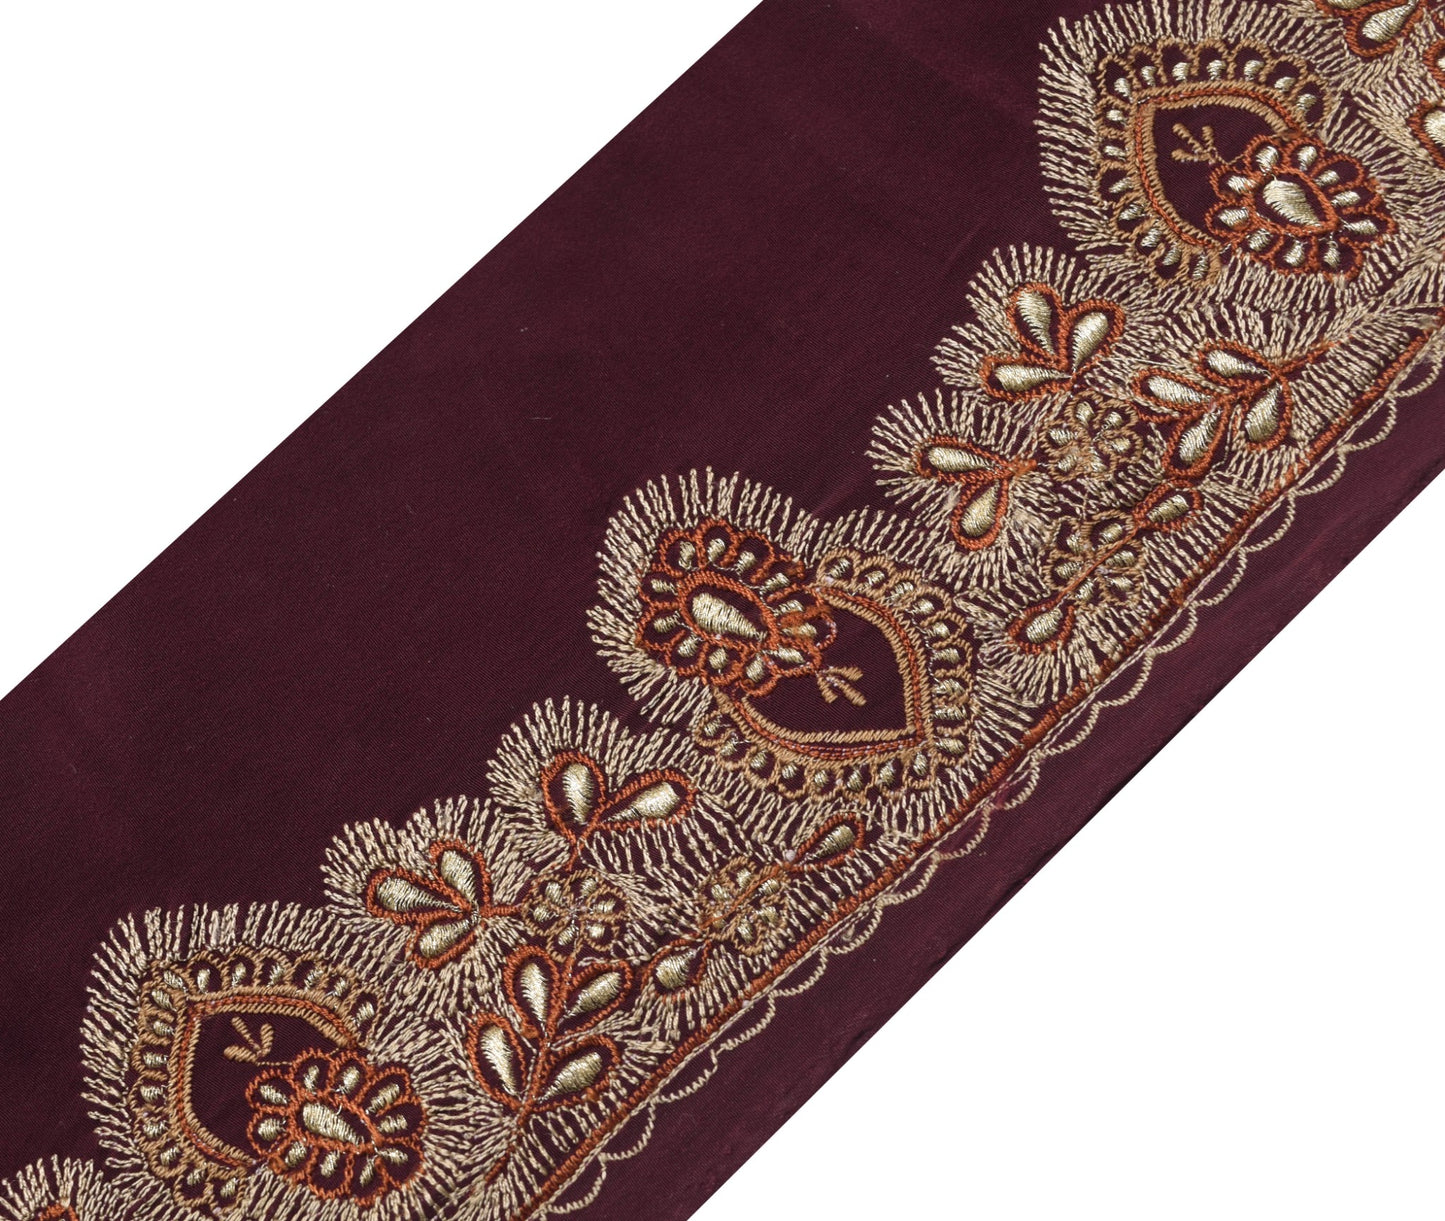 Sushila Vintage Maroon Crepe Saree Border Indian Craft Sewing Trim Floral Lace